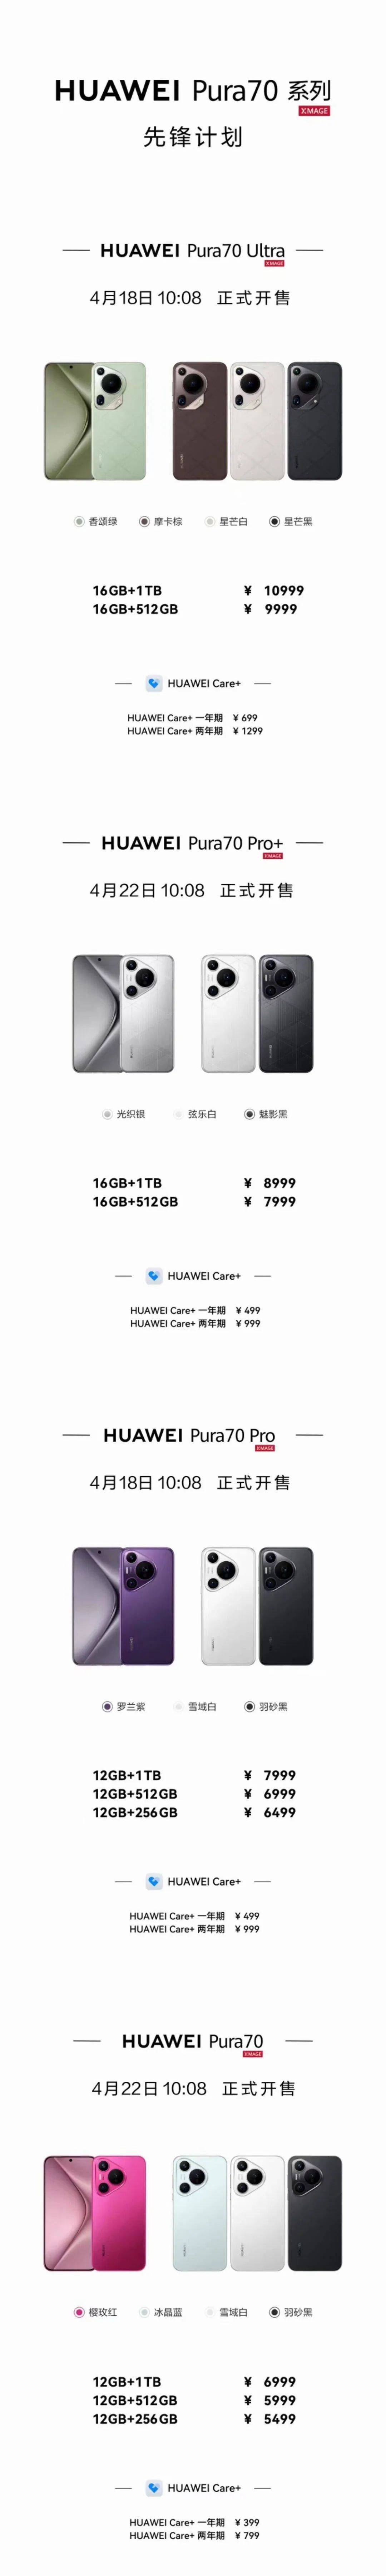 Image of Huawei Pura70 Series